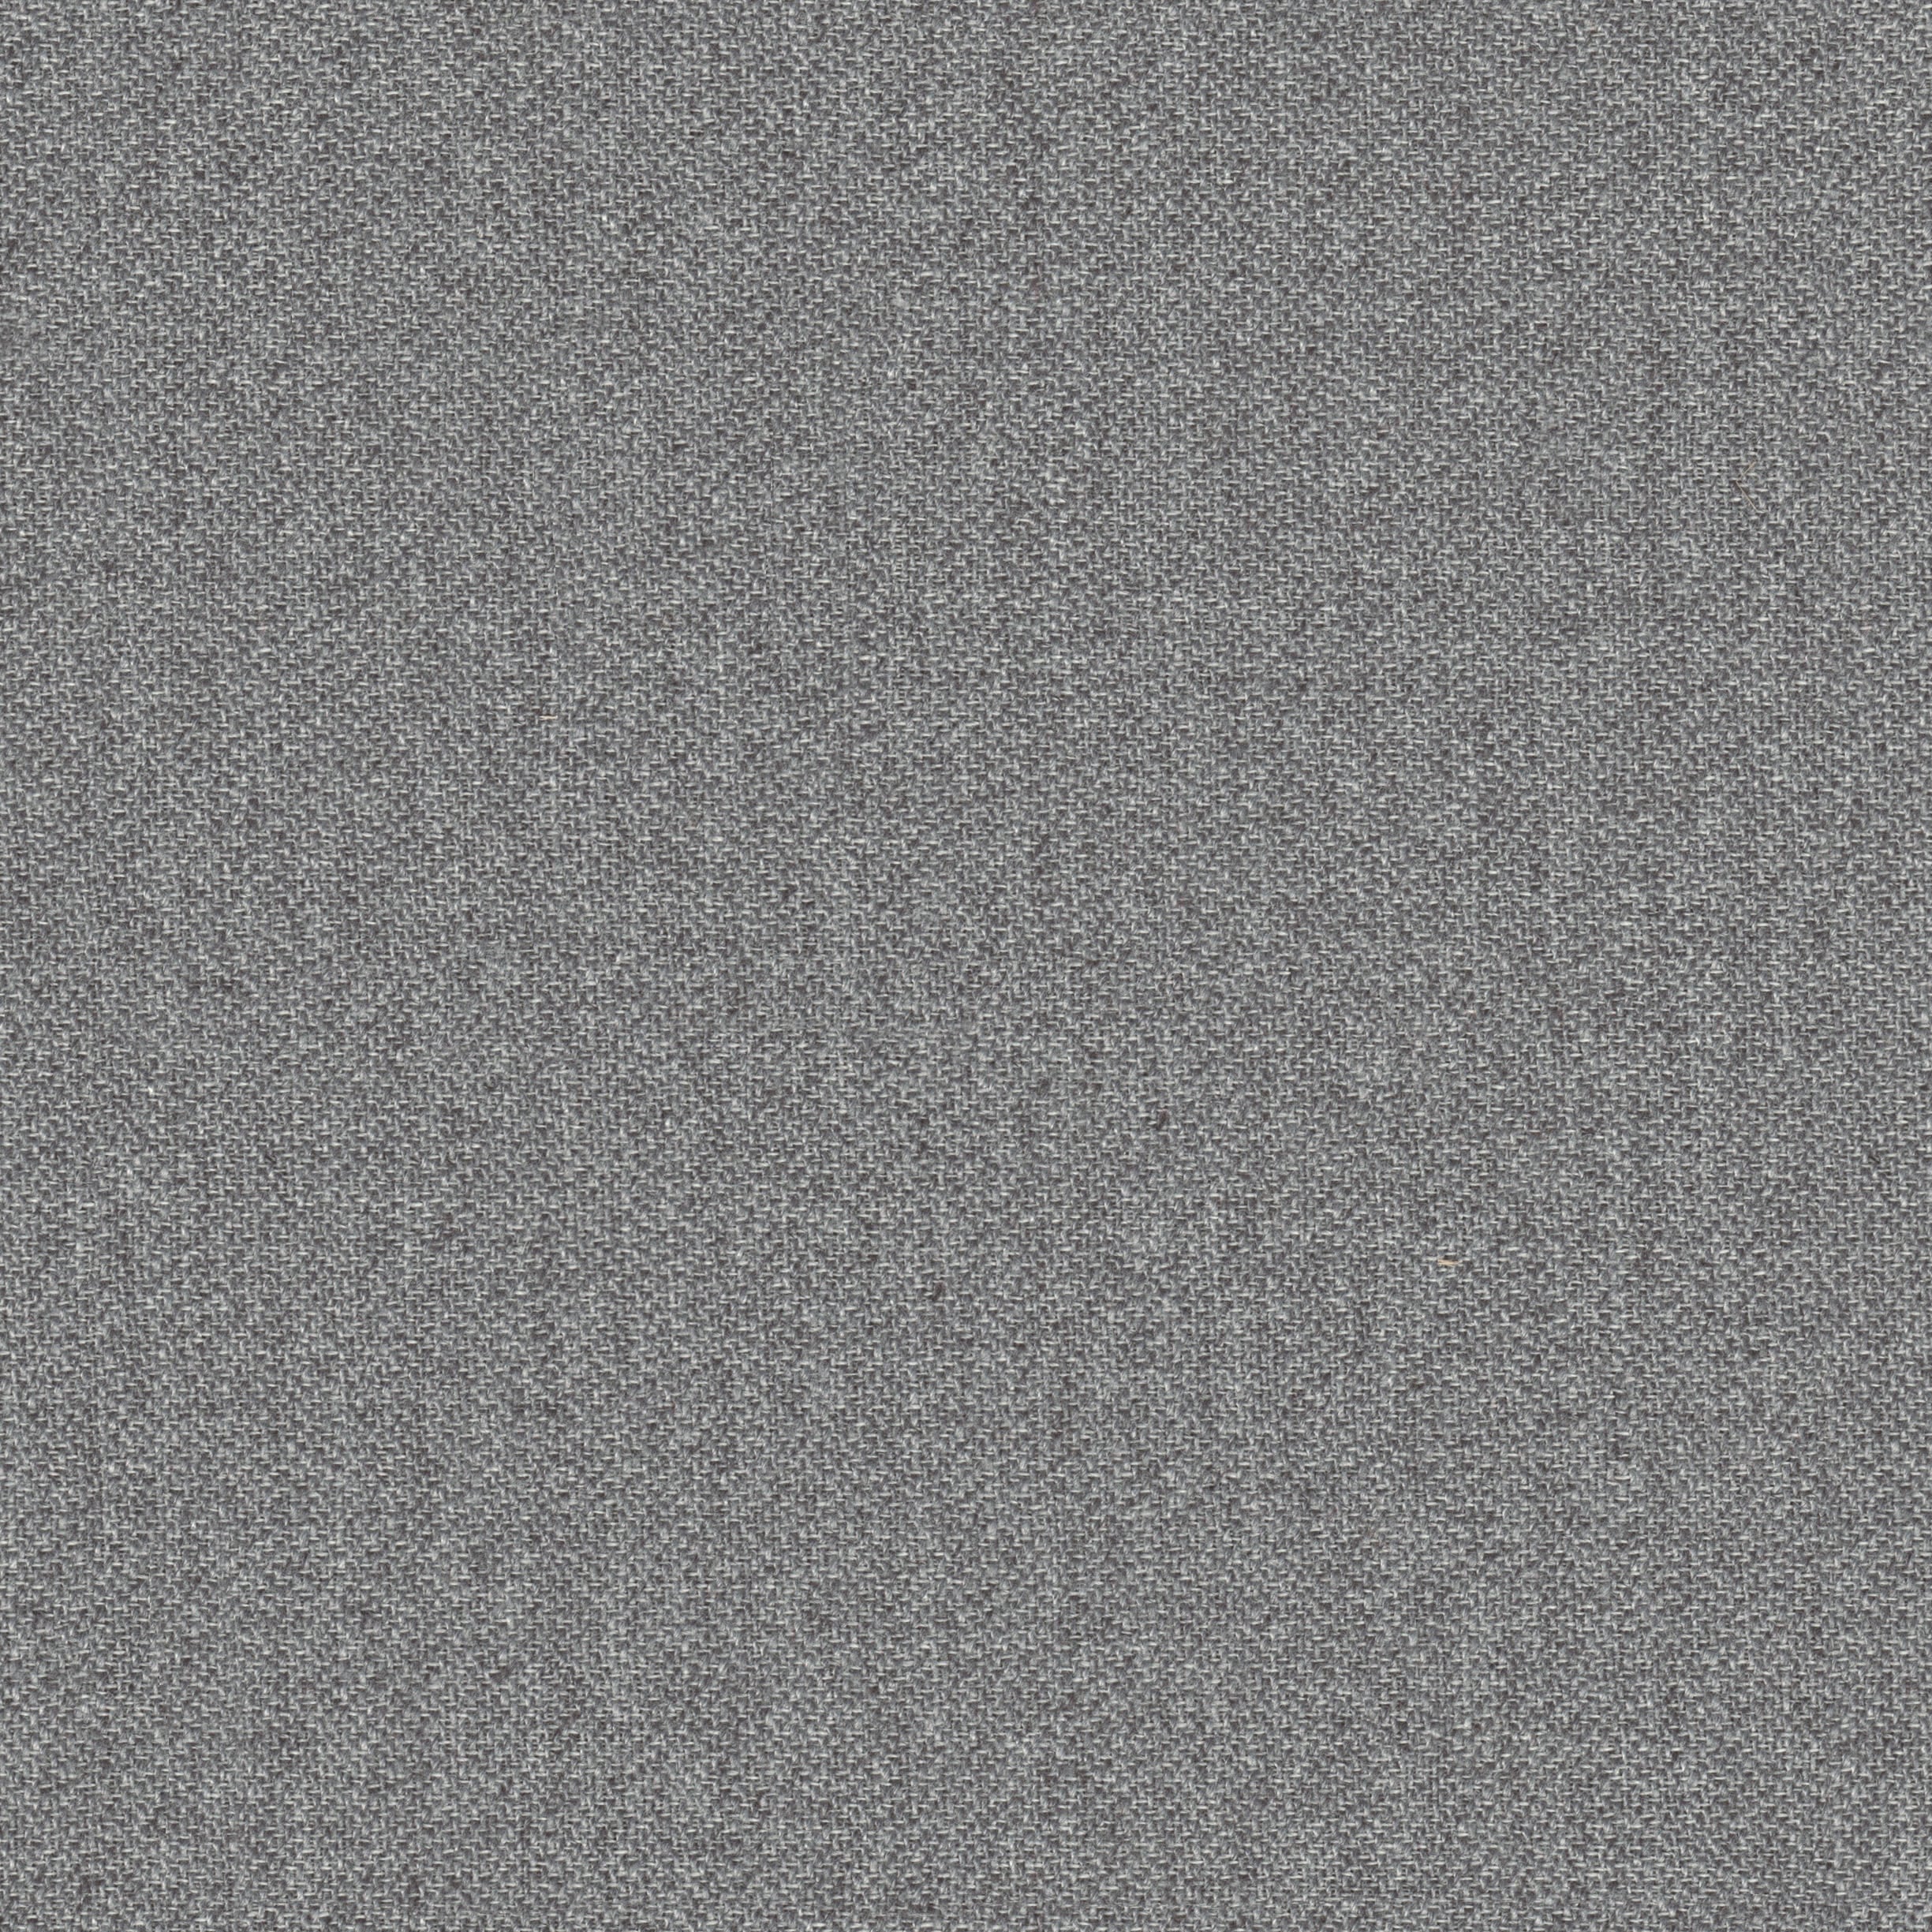 Premium Photo | White jeans texture background and wallpaper design